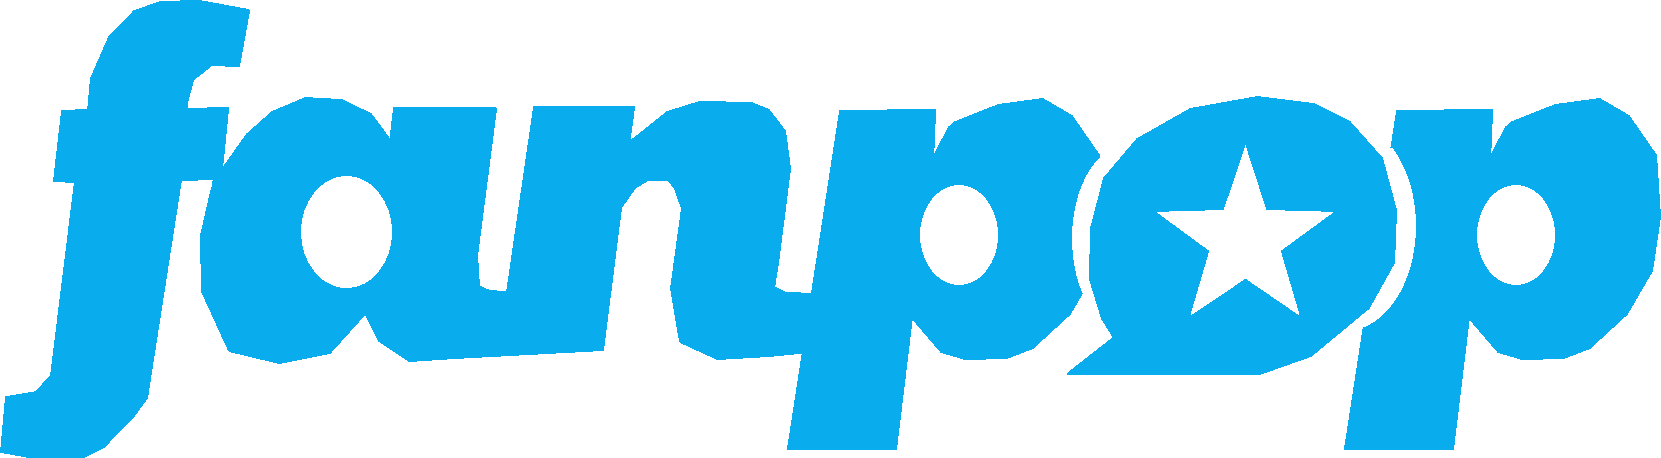 Fanpop Logo - Image - Fanpop Logo.png | Logopedia | FANDOM powered by Wikia